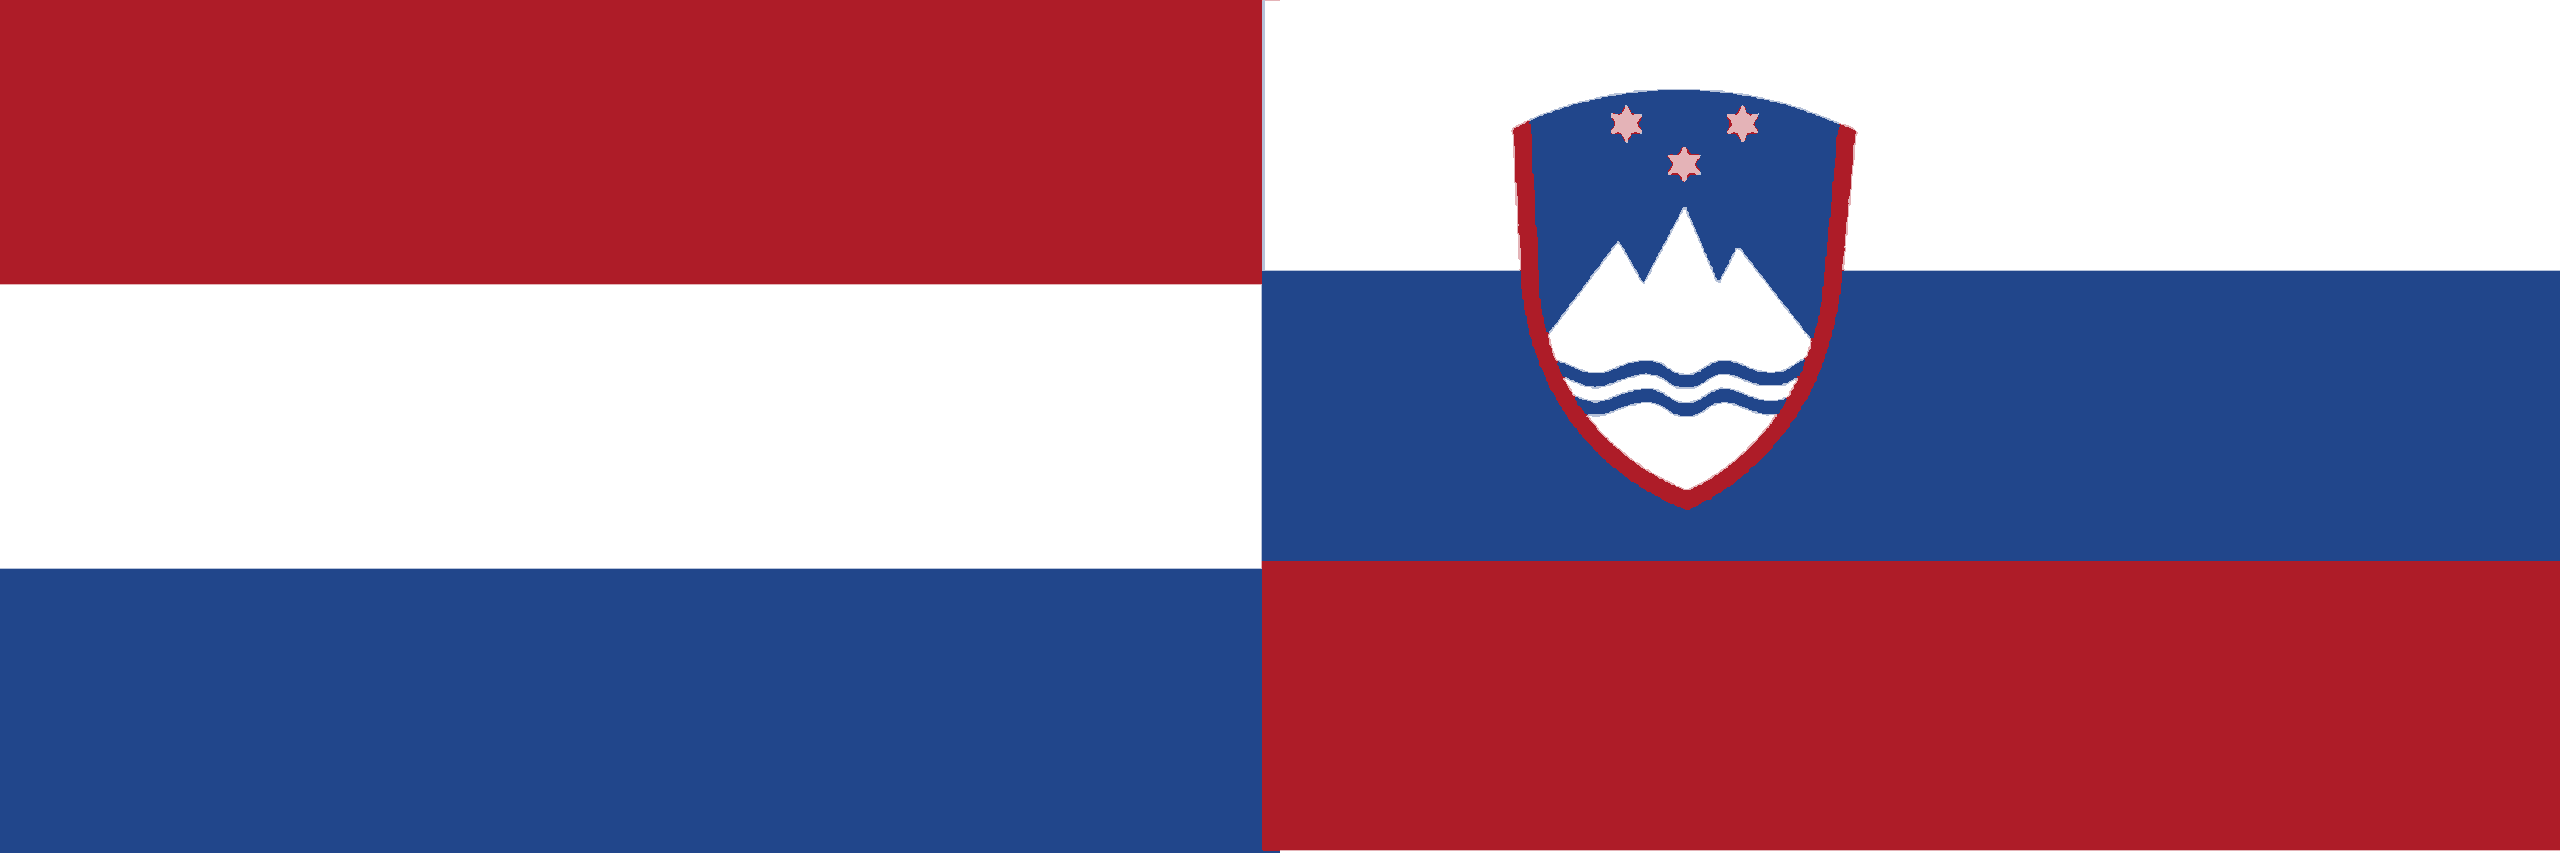 netherlands slovenia